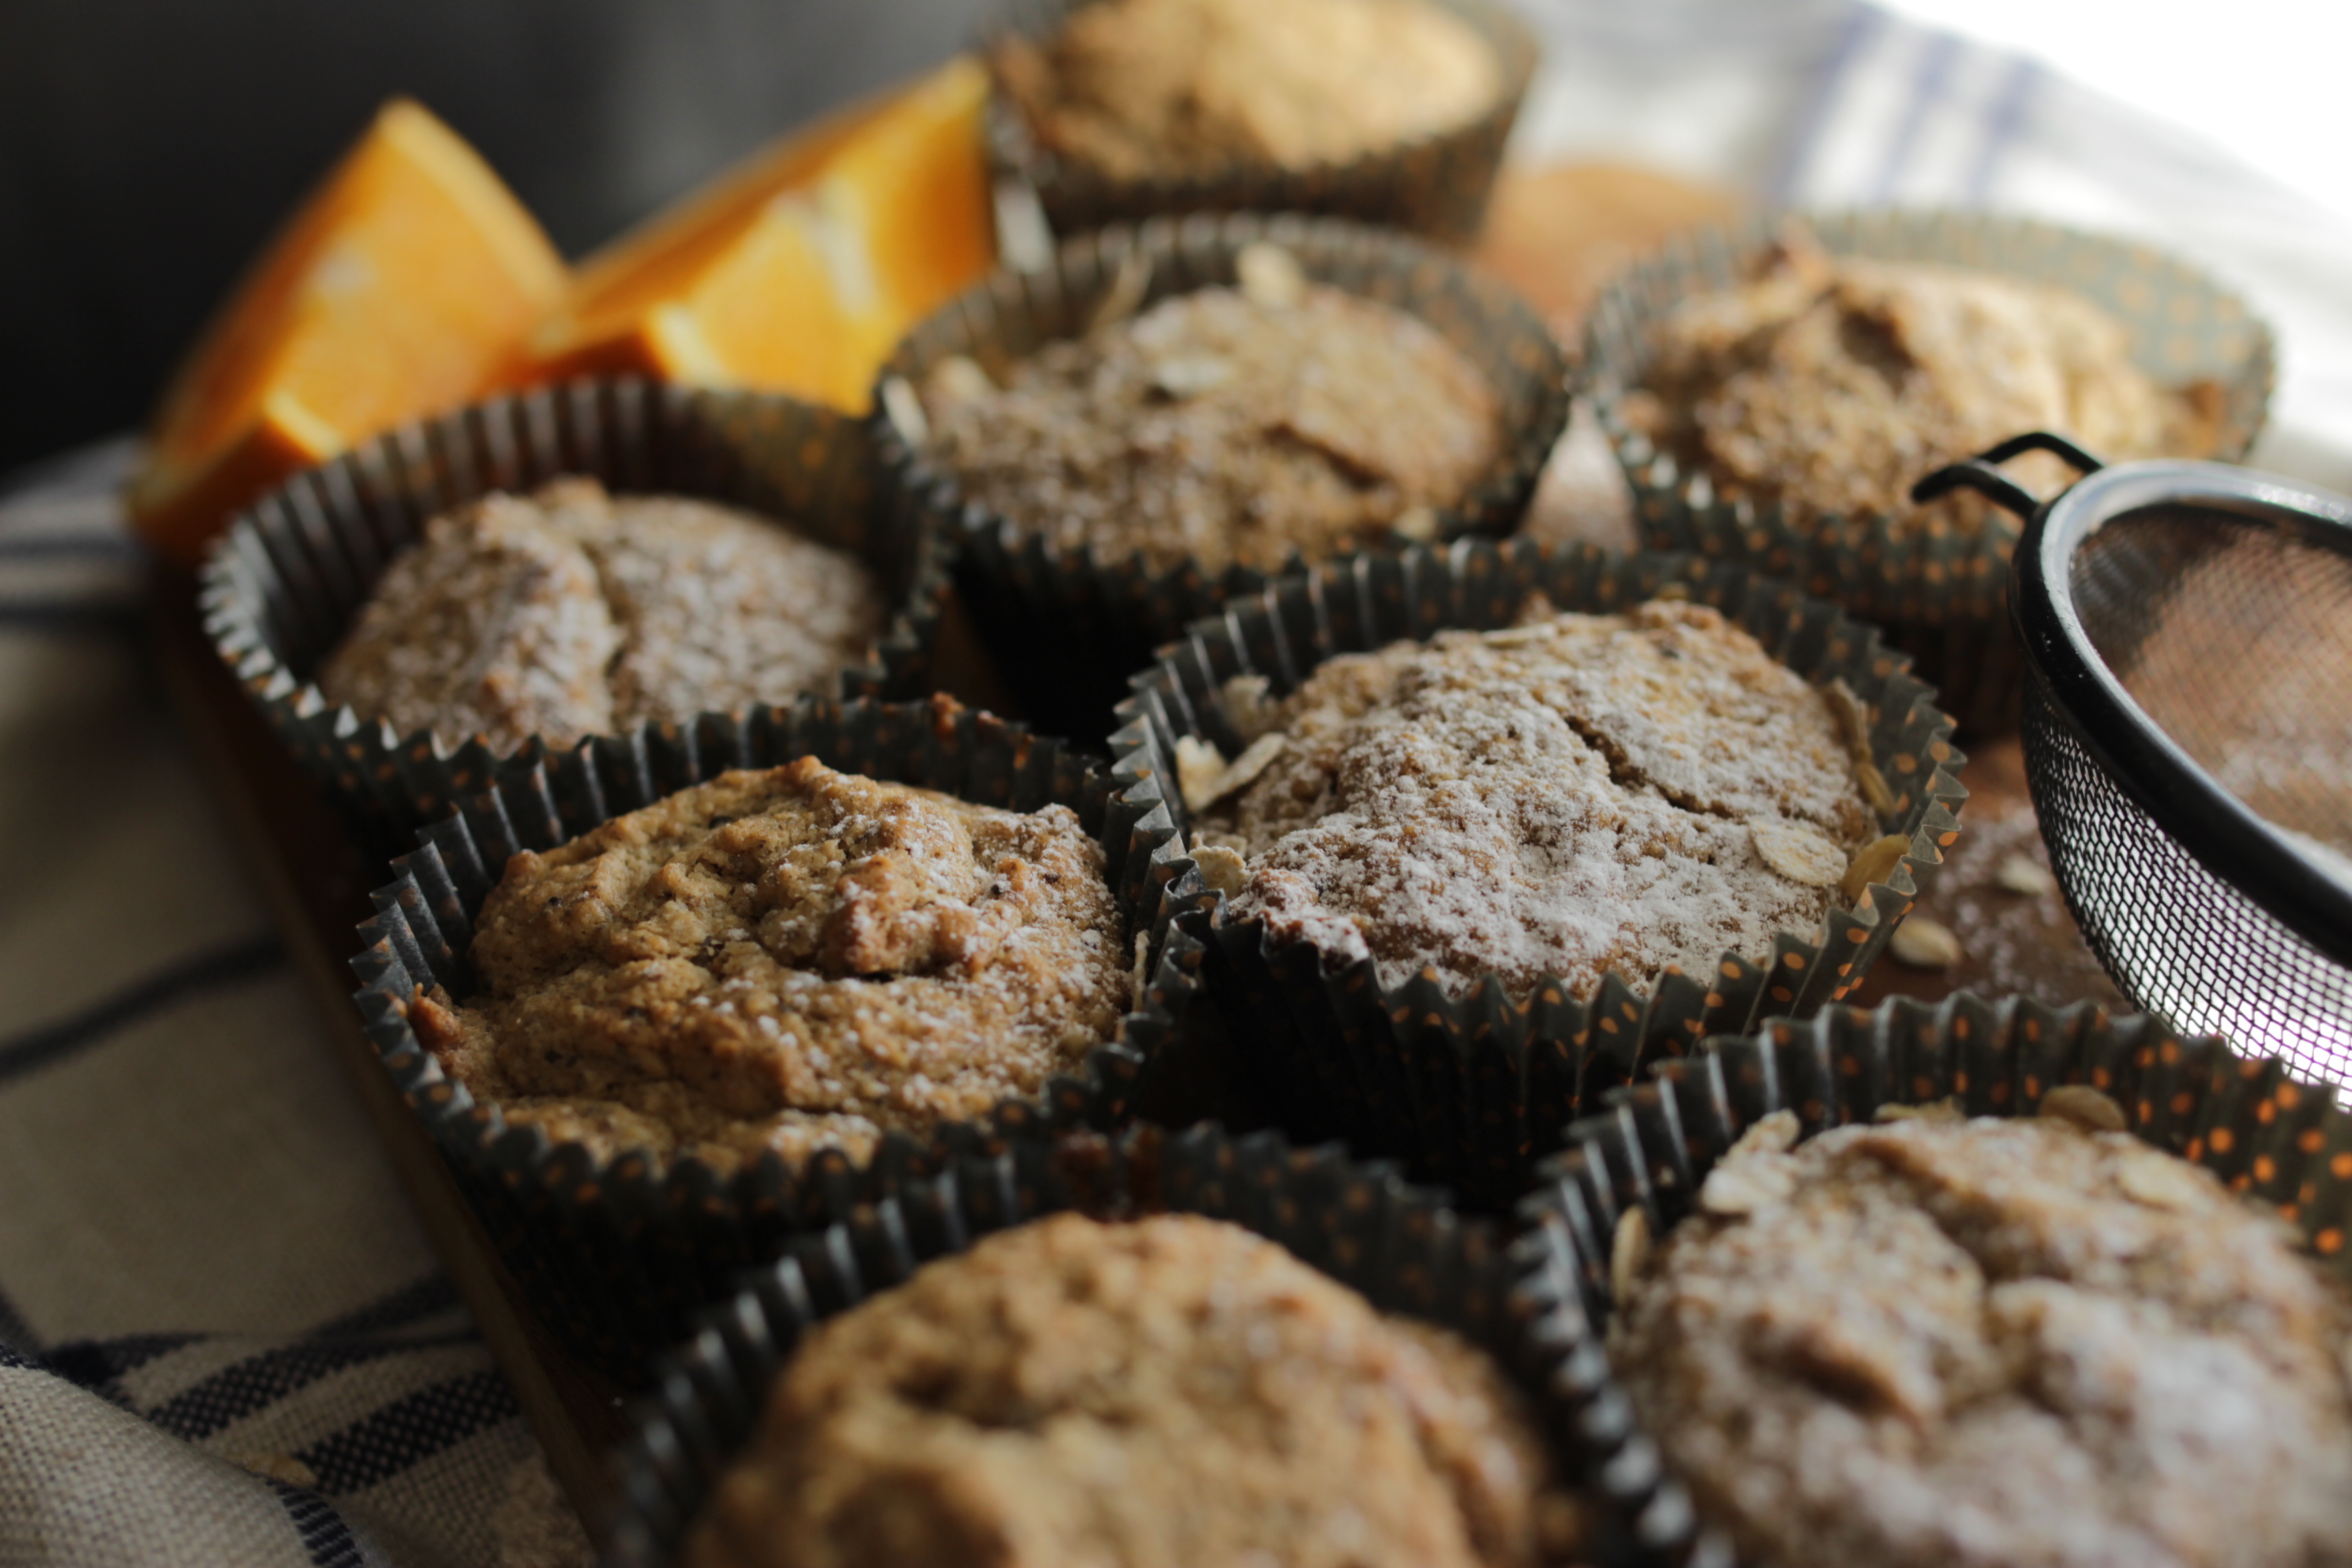 Grove glutenfrie muffins (+)